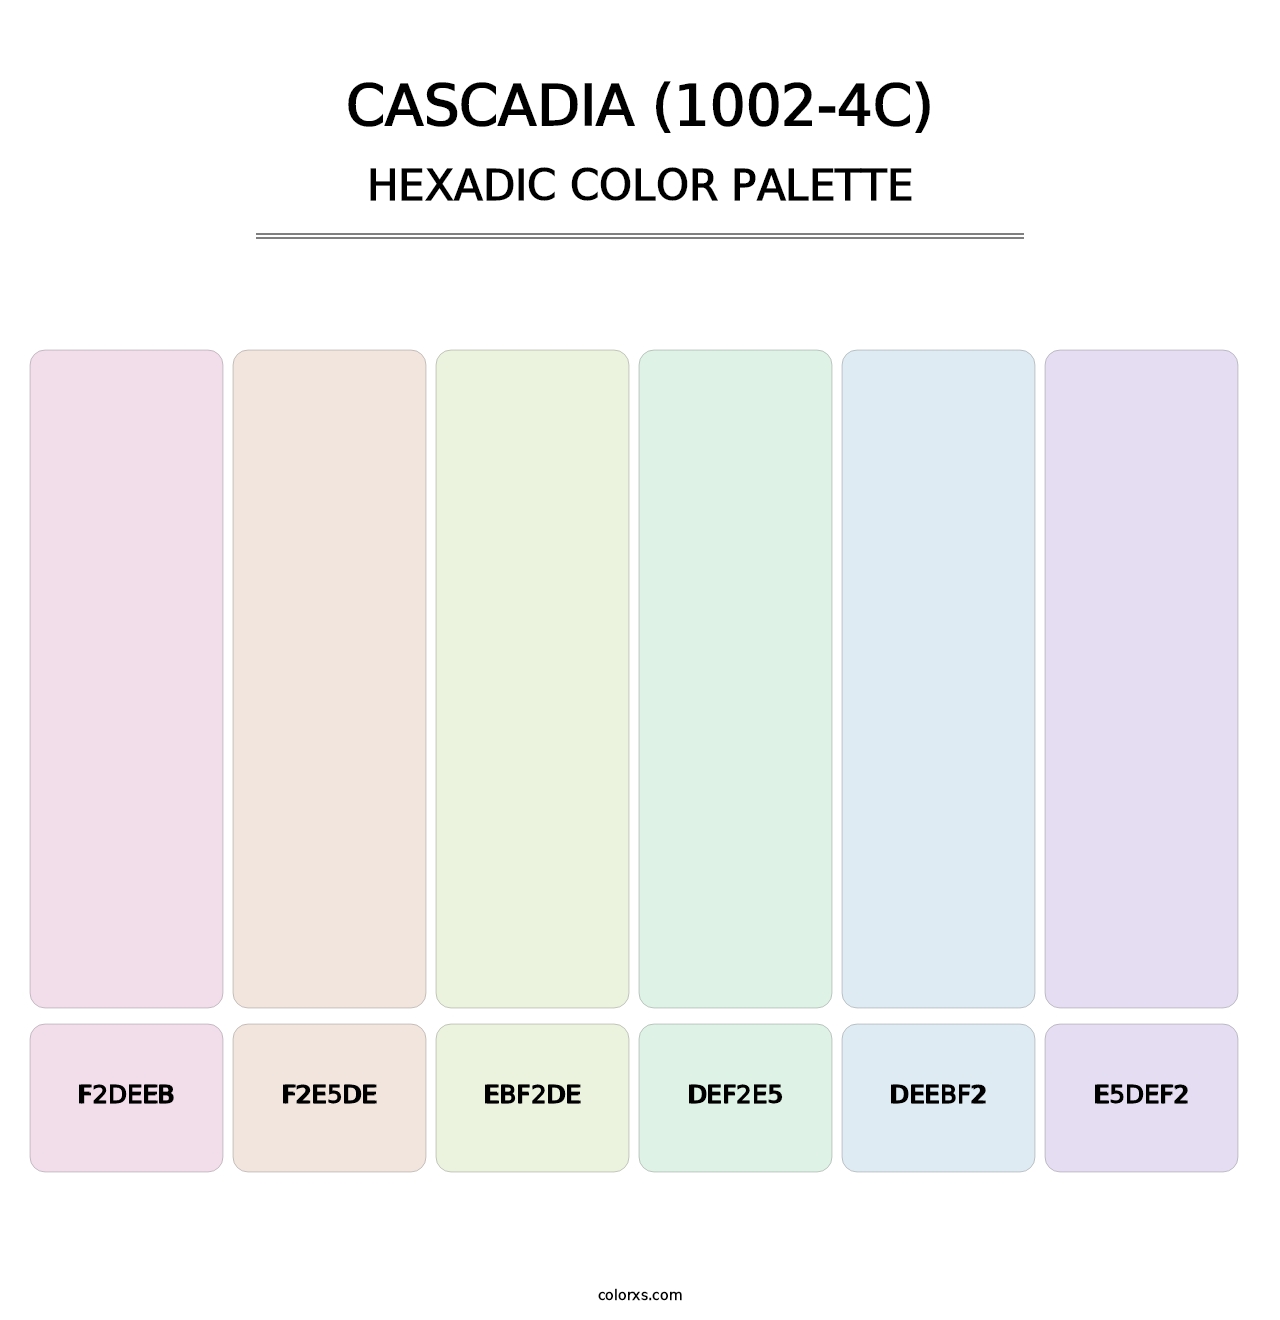 Cascadia (1002-4C) - Hexadic Color Palette